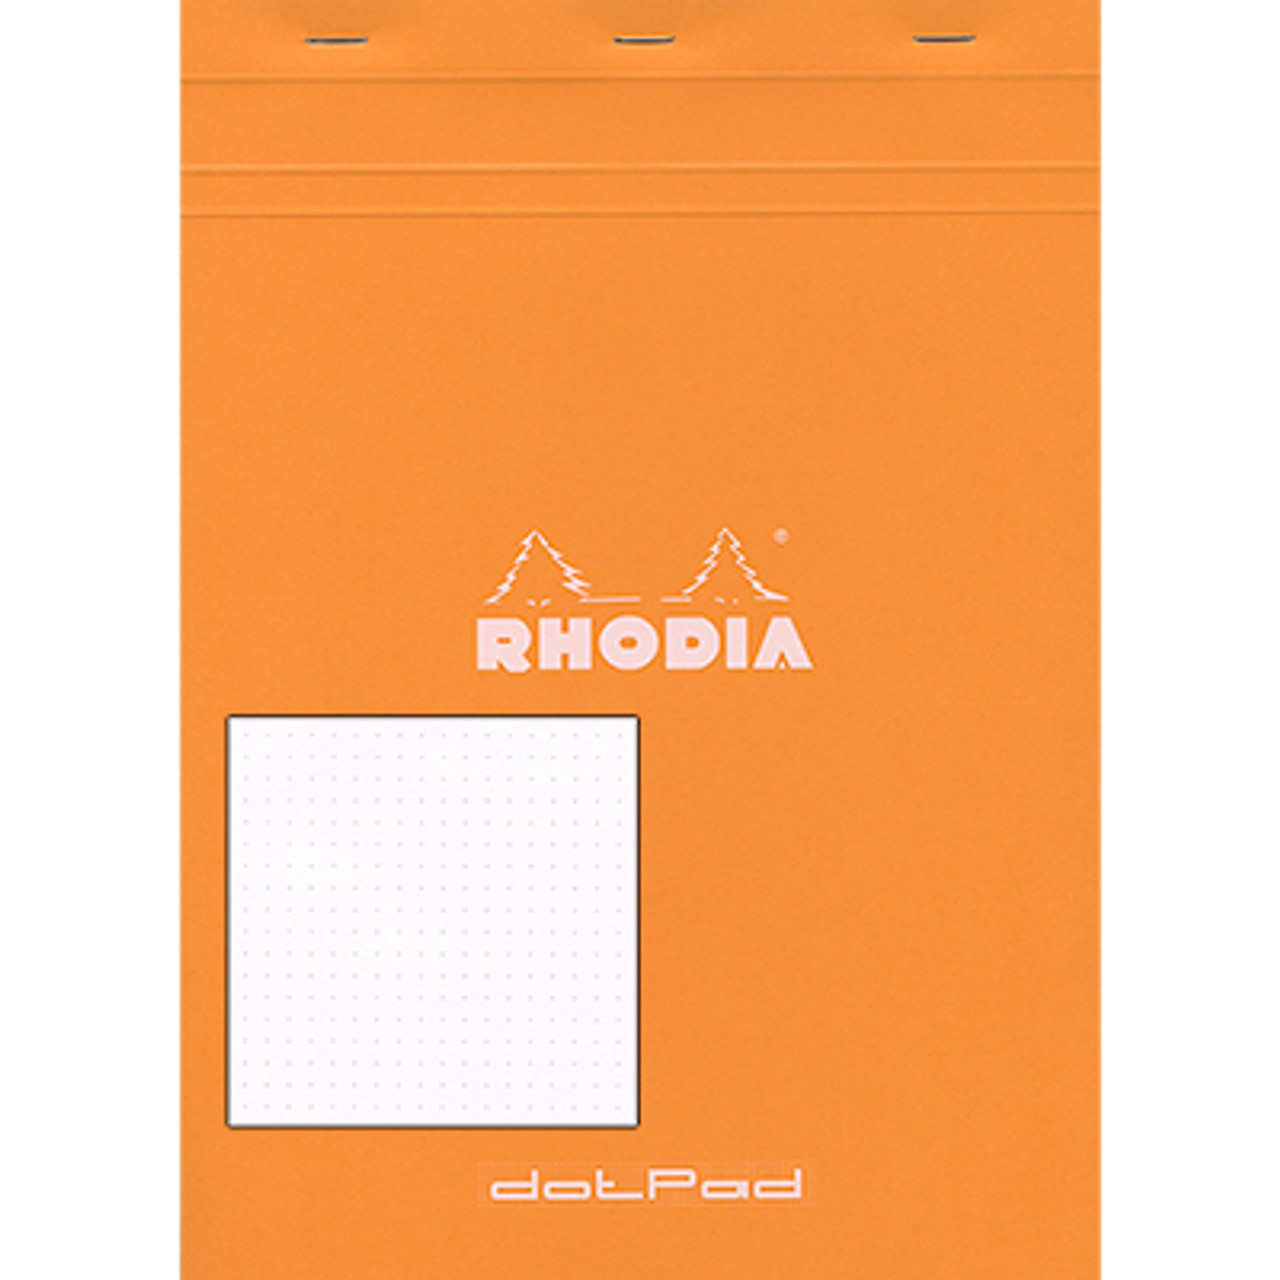 Rhodia Dot Grid Pad 8.25x11 inches - John Neal Books